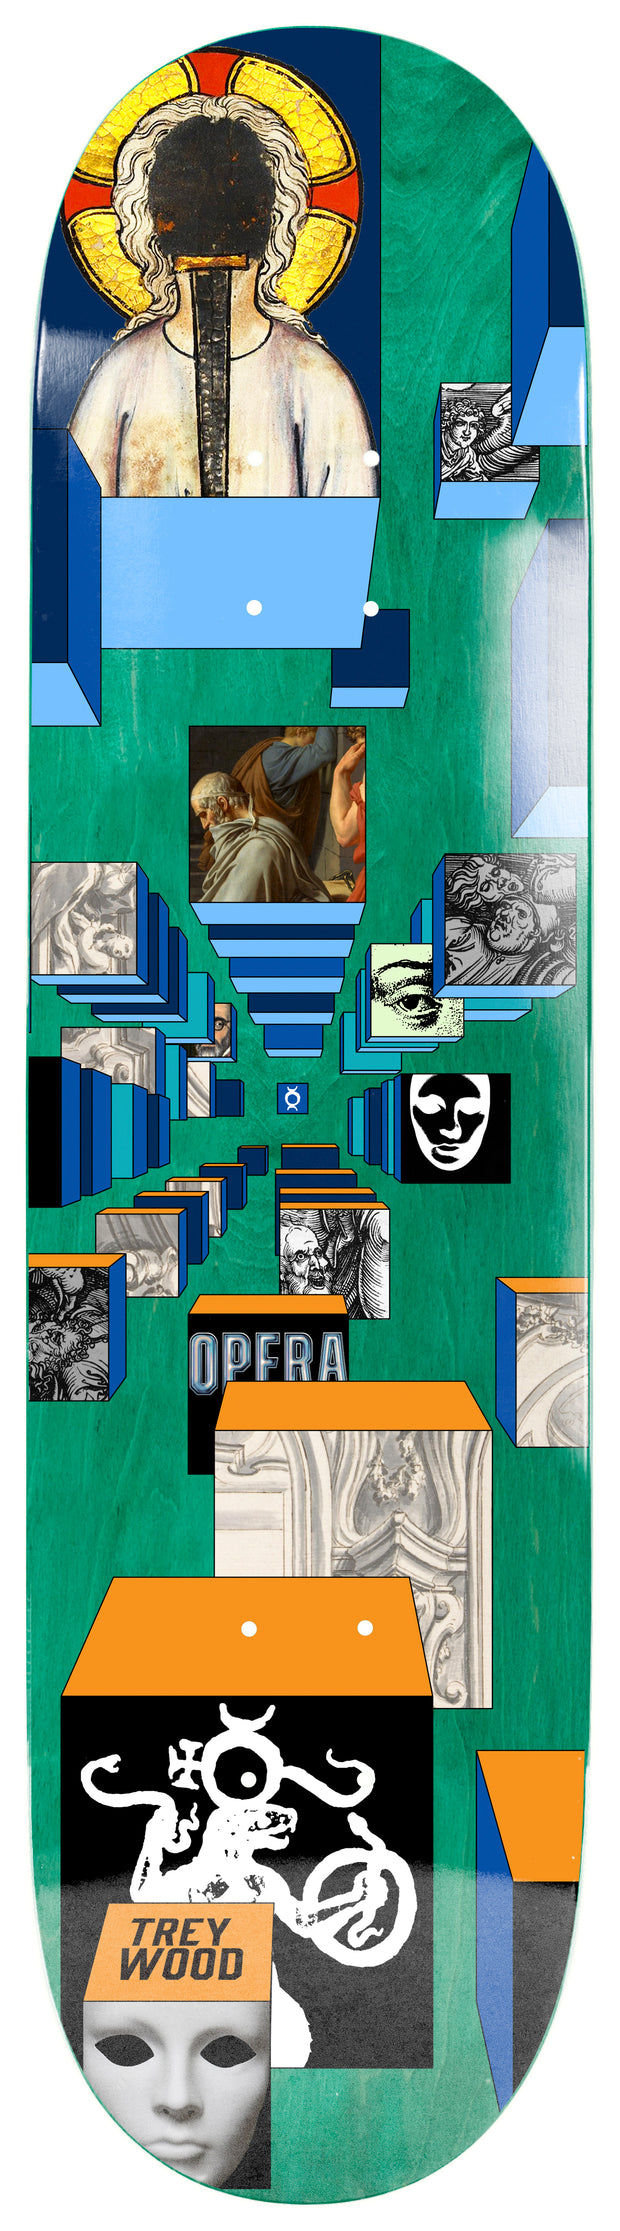 Opera  Trey Wood  "Dimensional"  8.25"